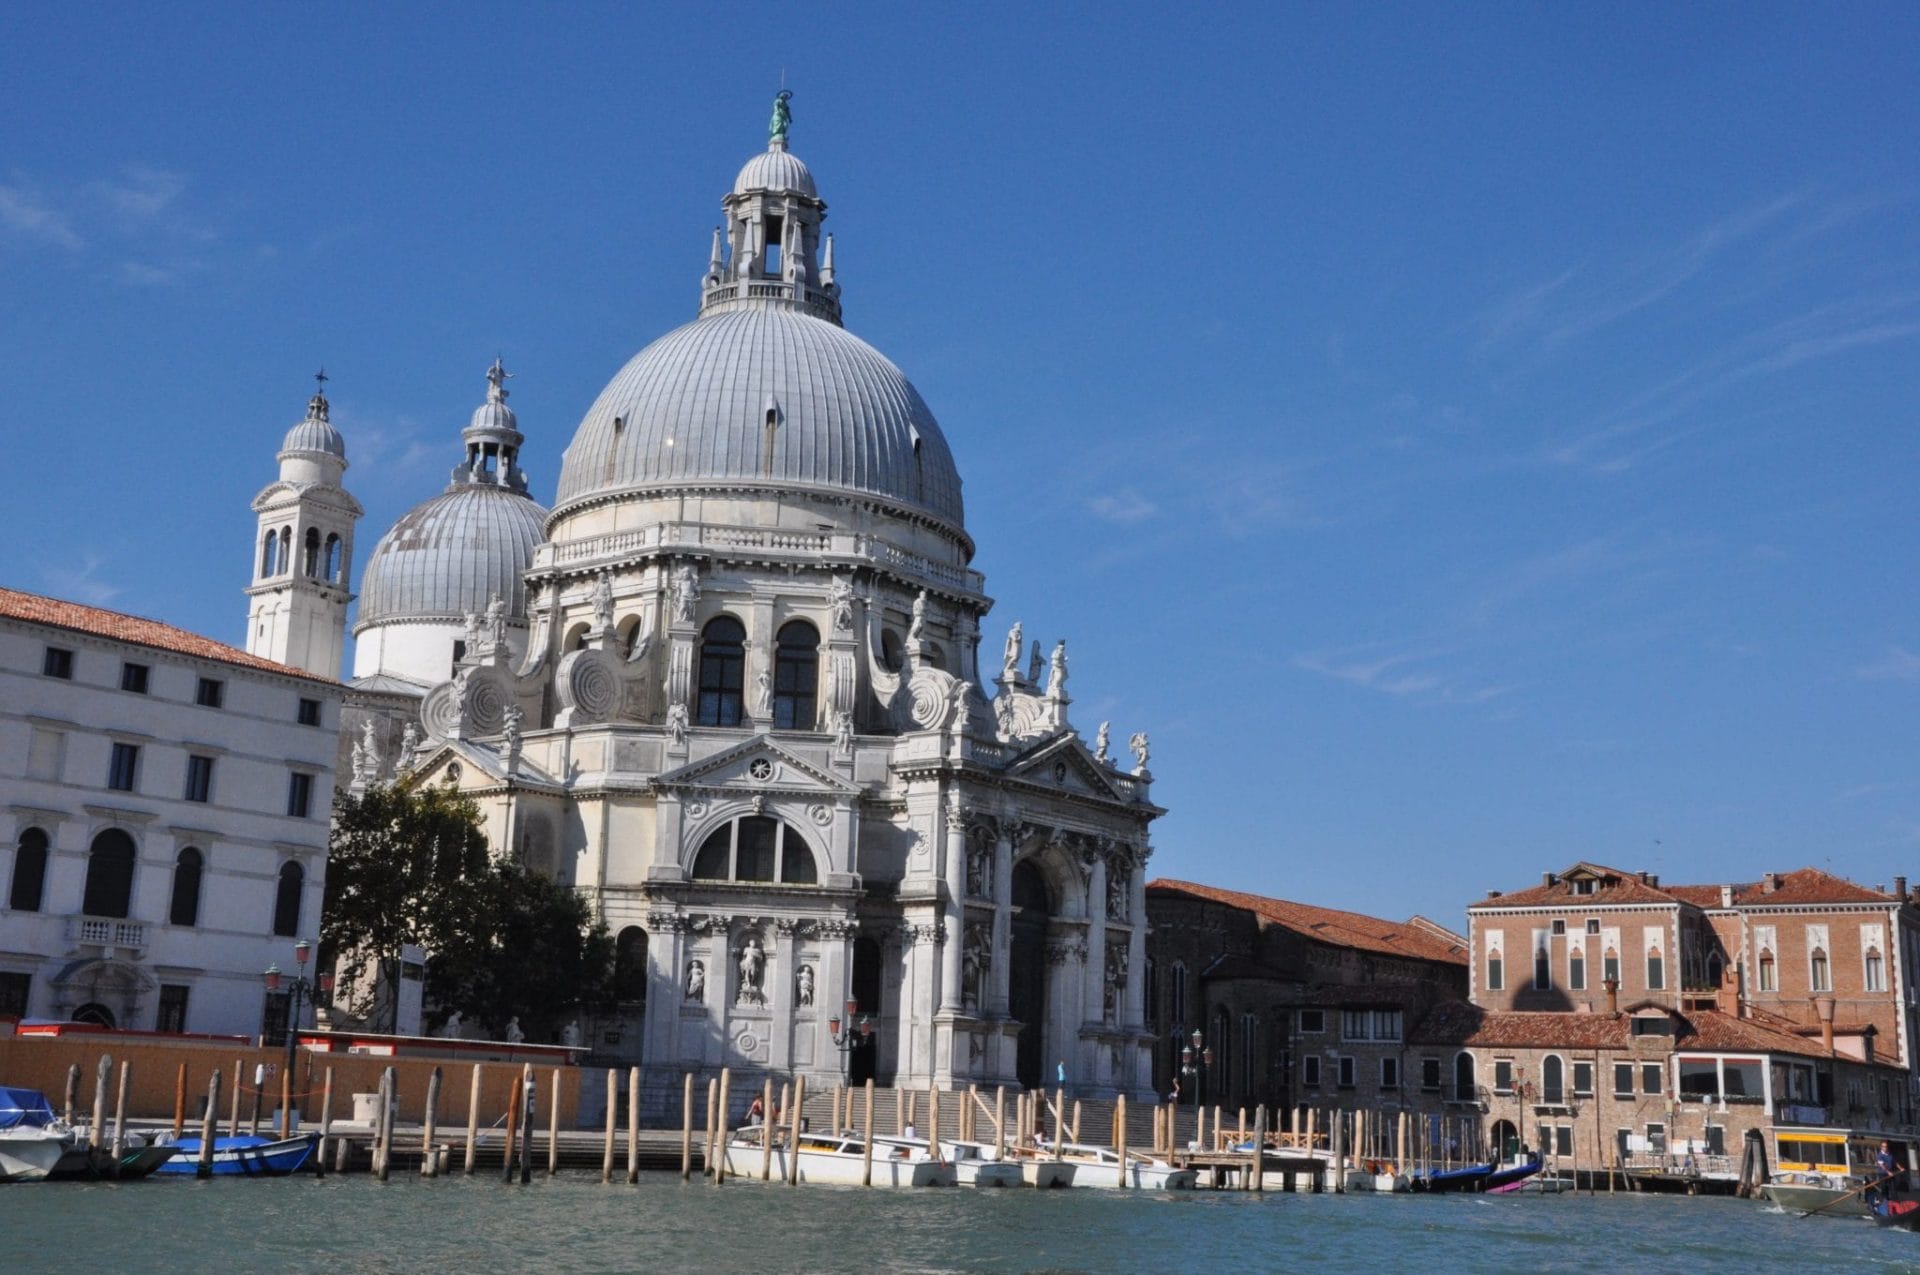 The church of Santa Maria della Salute in Dorsoduro, one of the more tranquil neighborhoods of Venice.